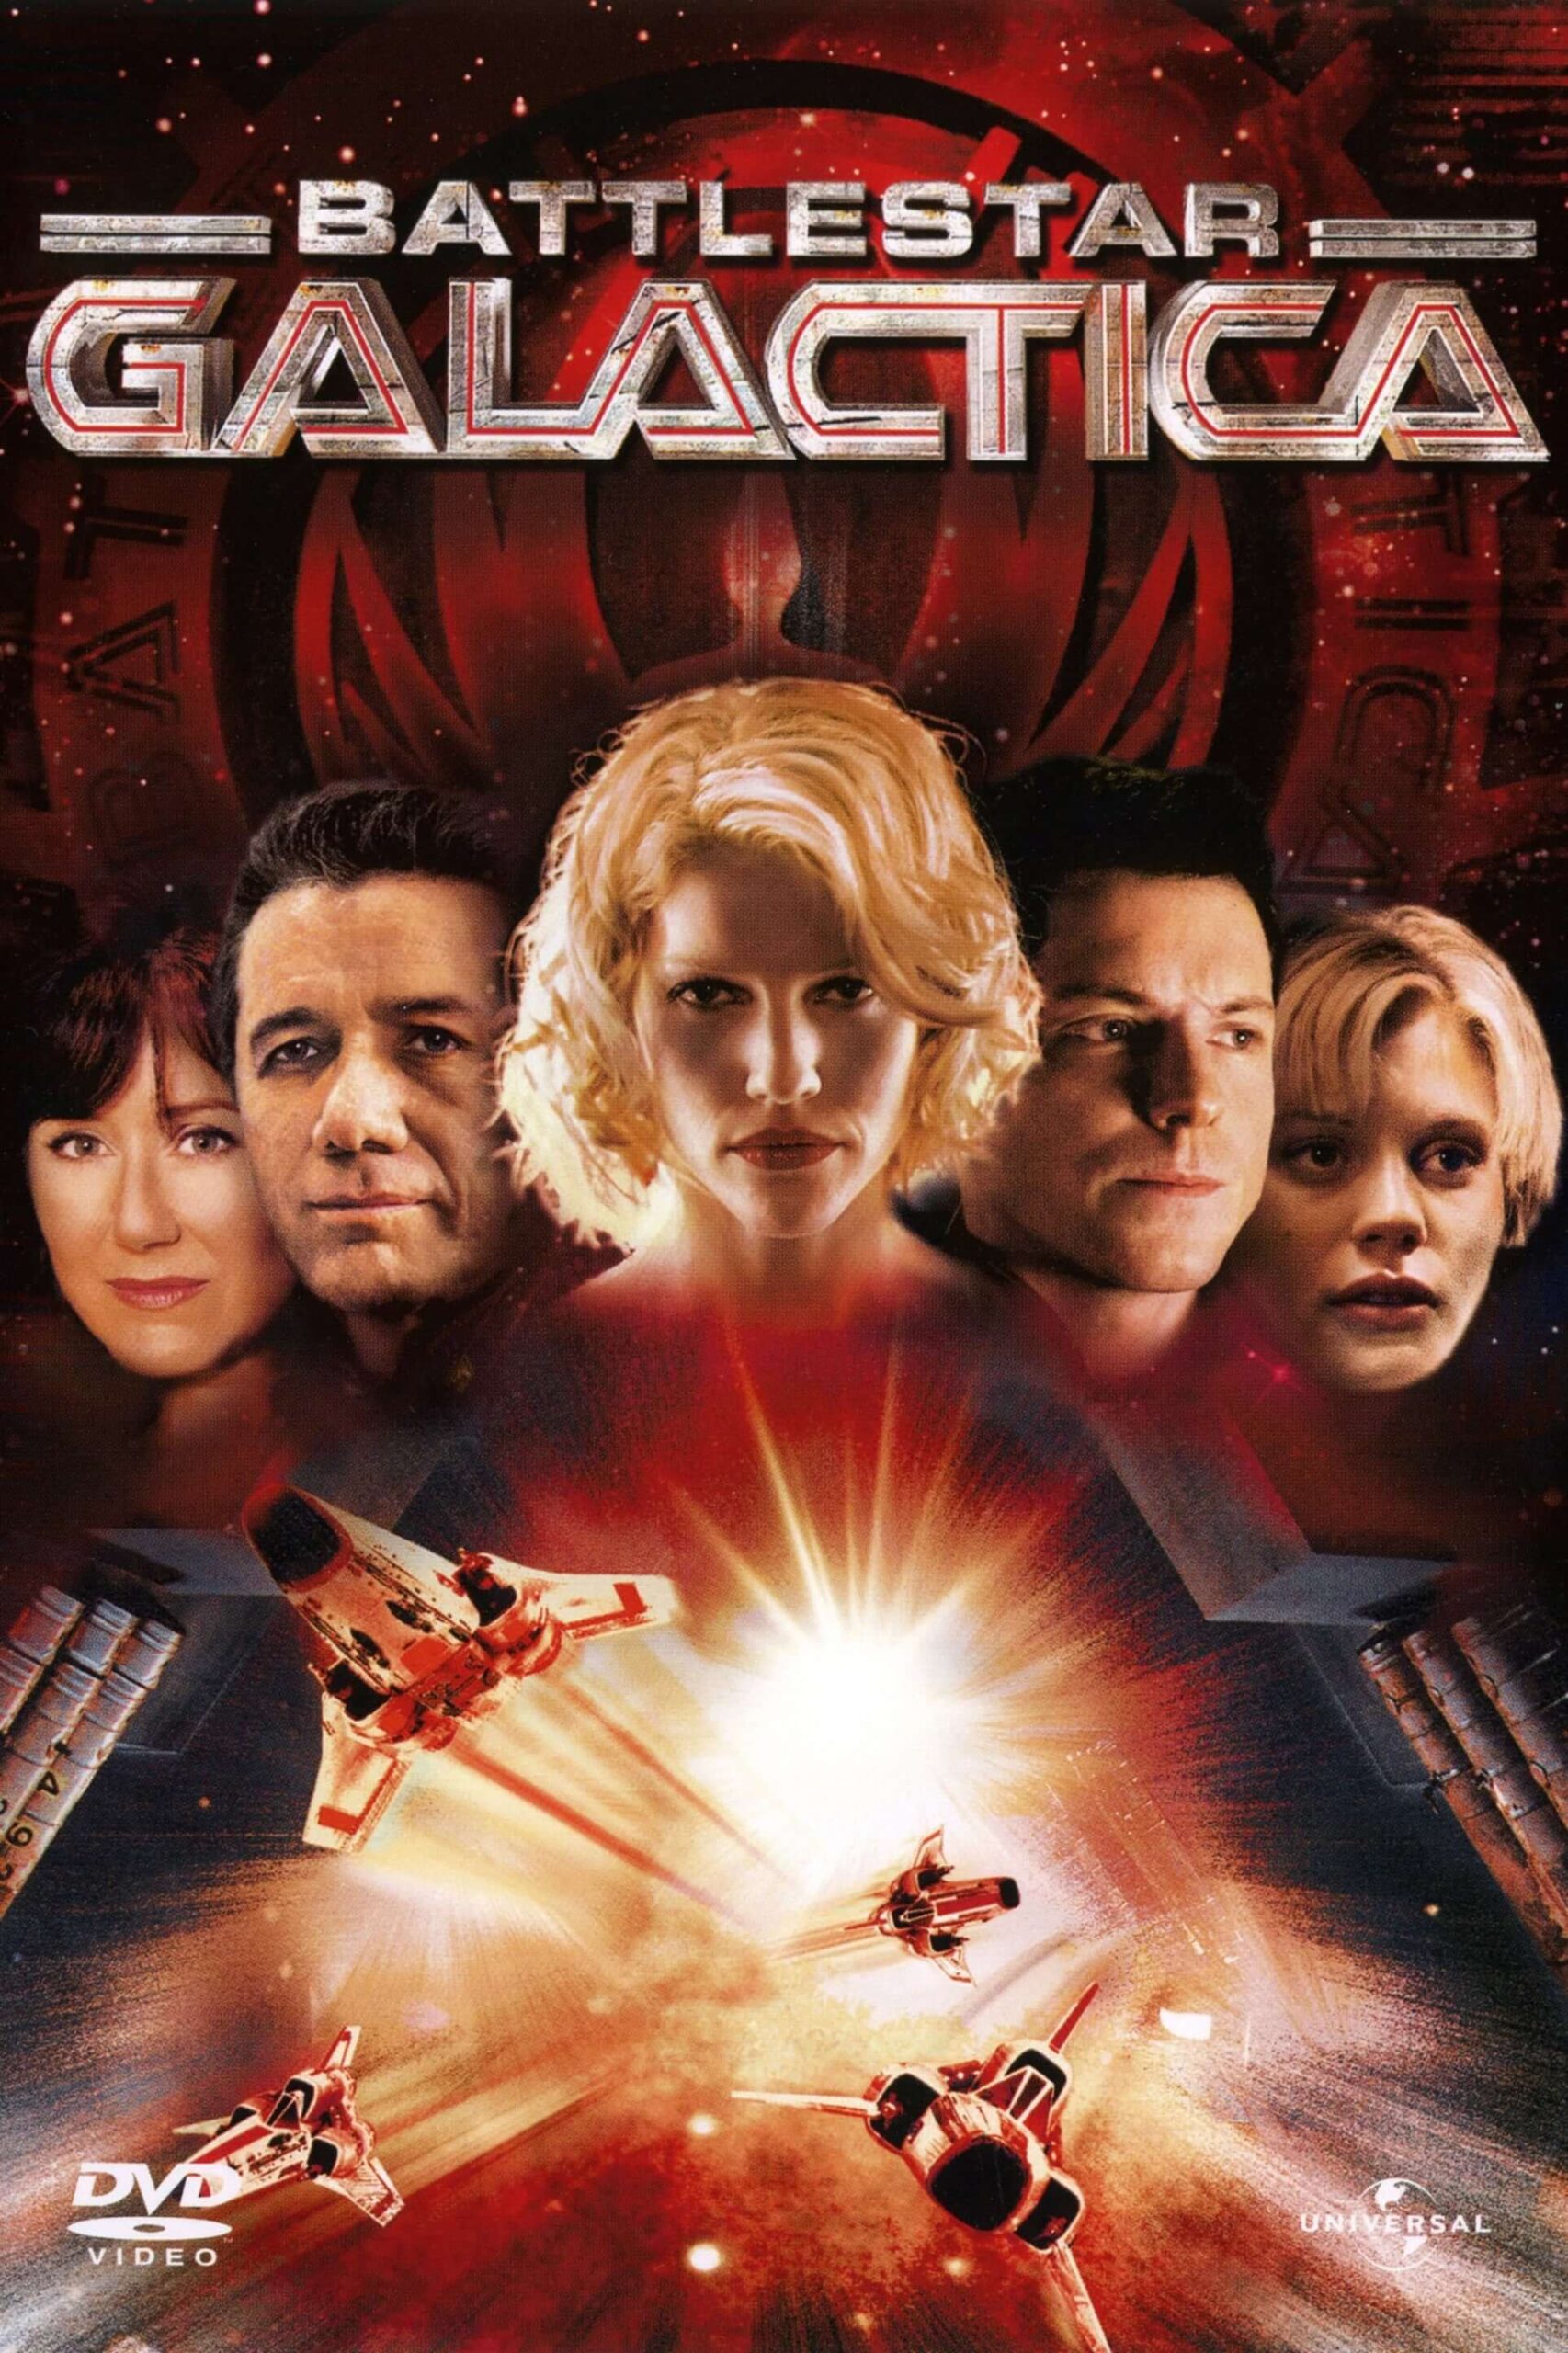 ناوبر فضایی گالاکتیکا (Battlestar Galactica)